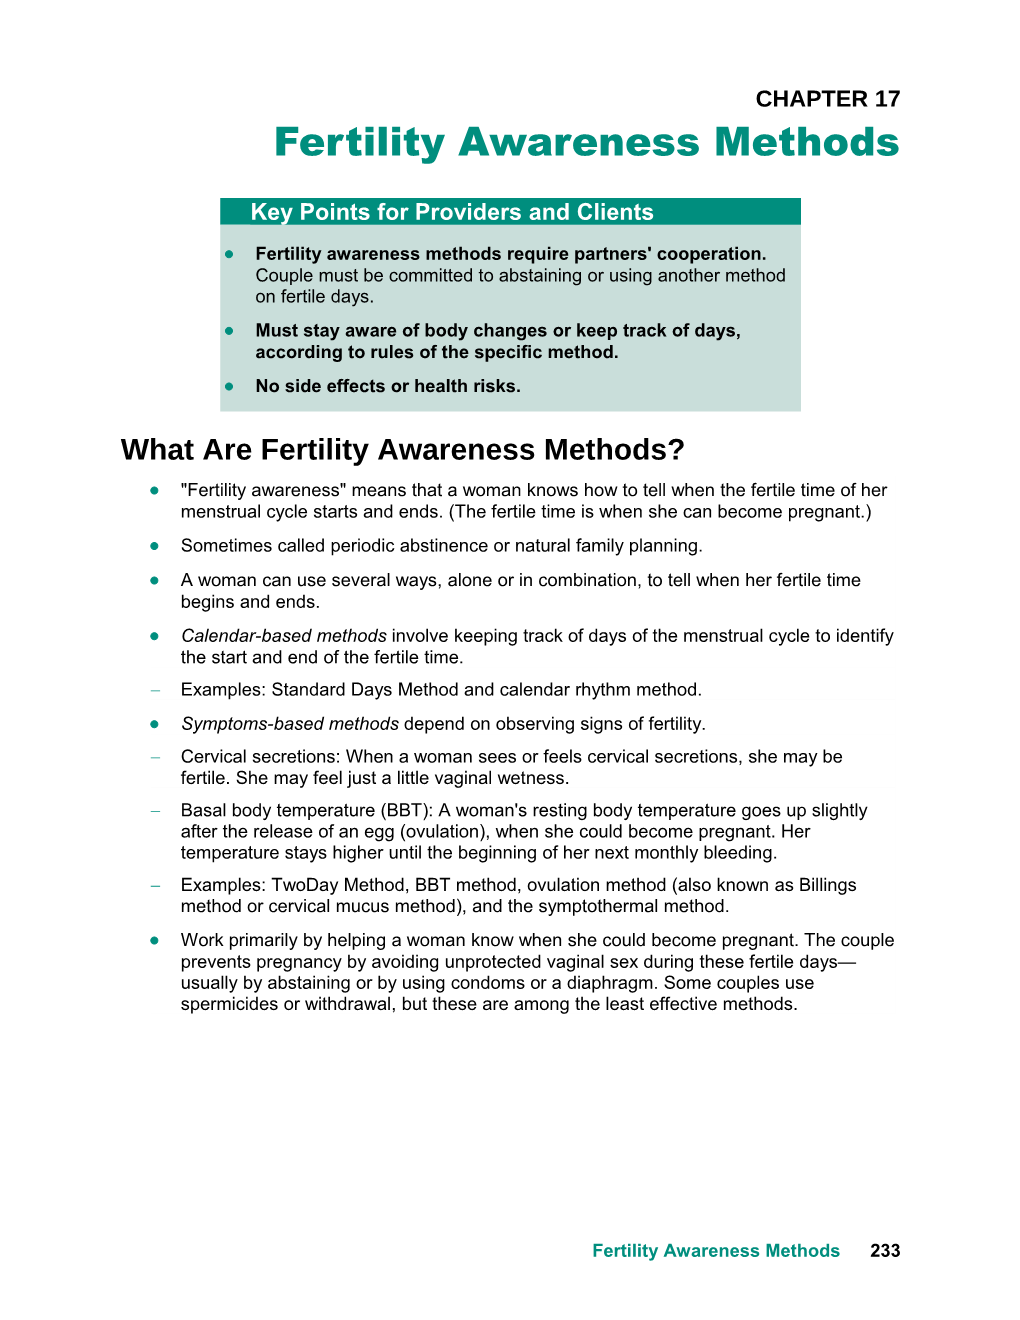 CHAPTER 17 Fertility Awareness Methods